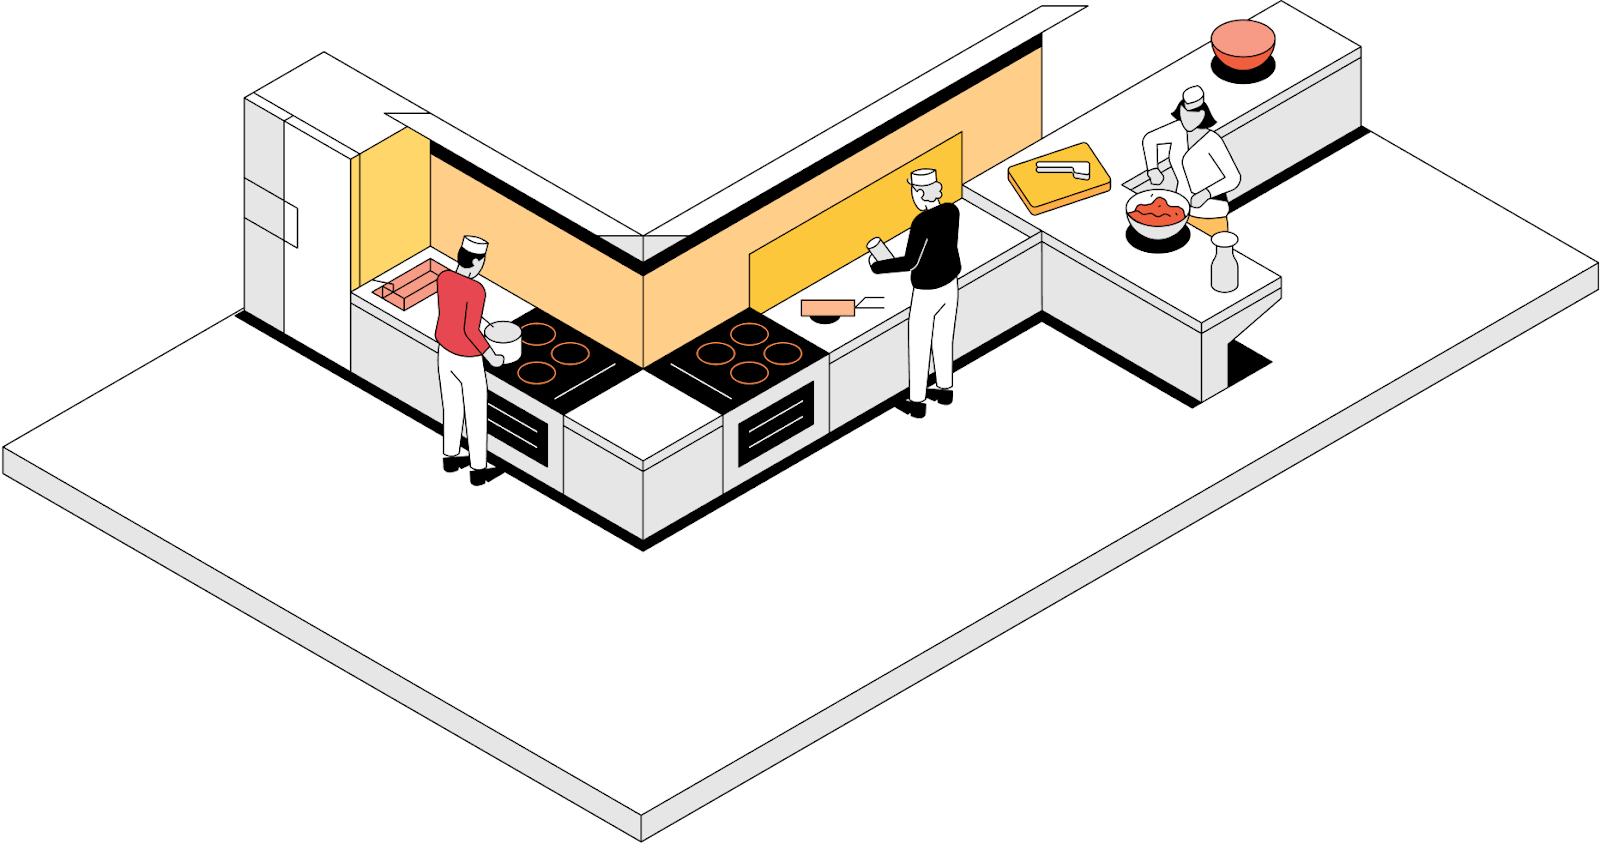 Illustration of kitchen operations